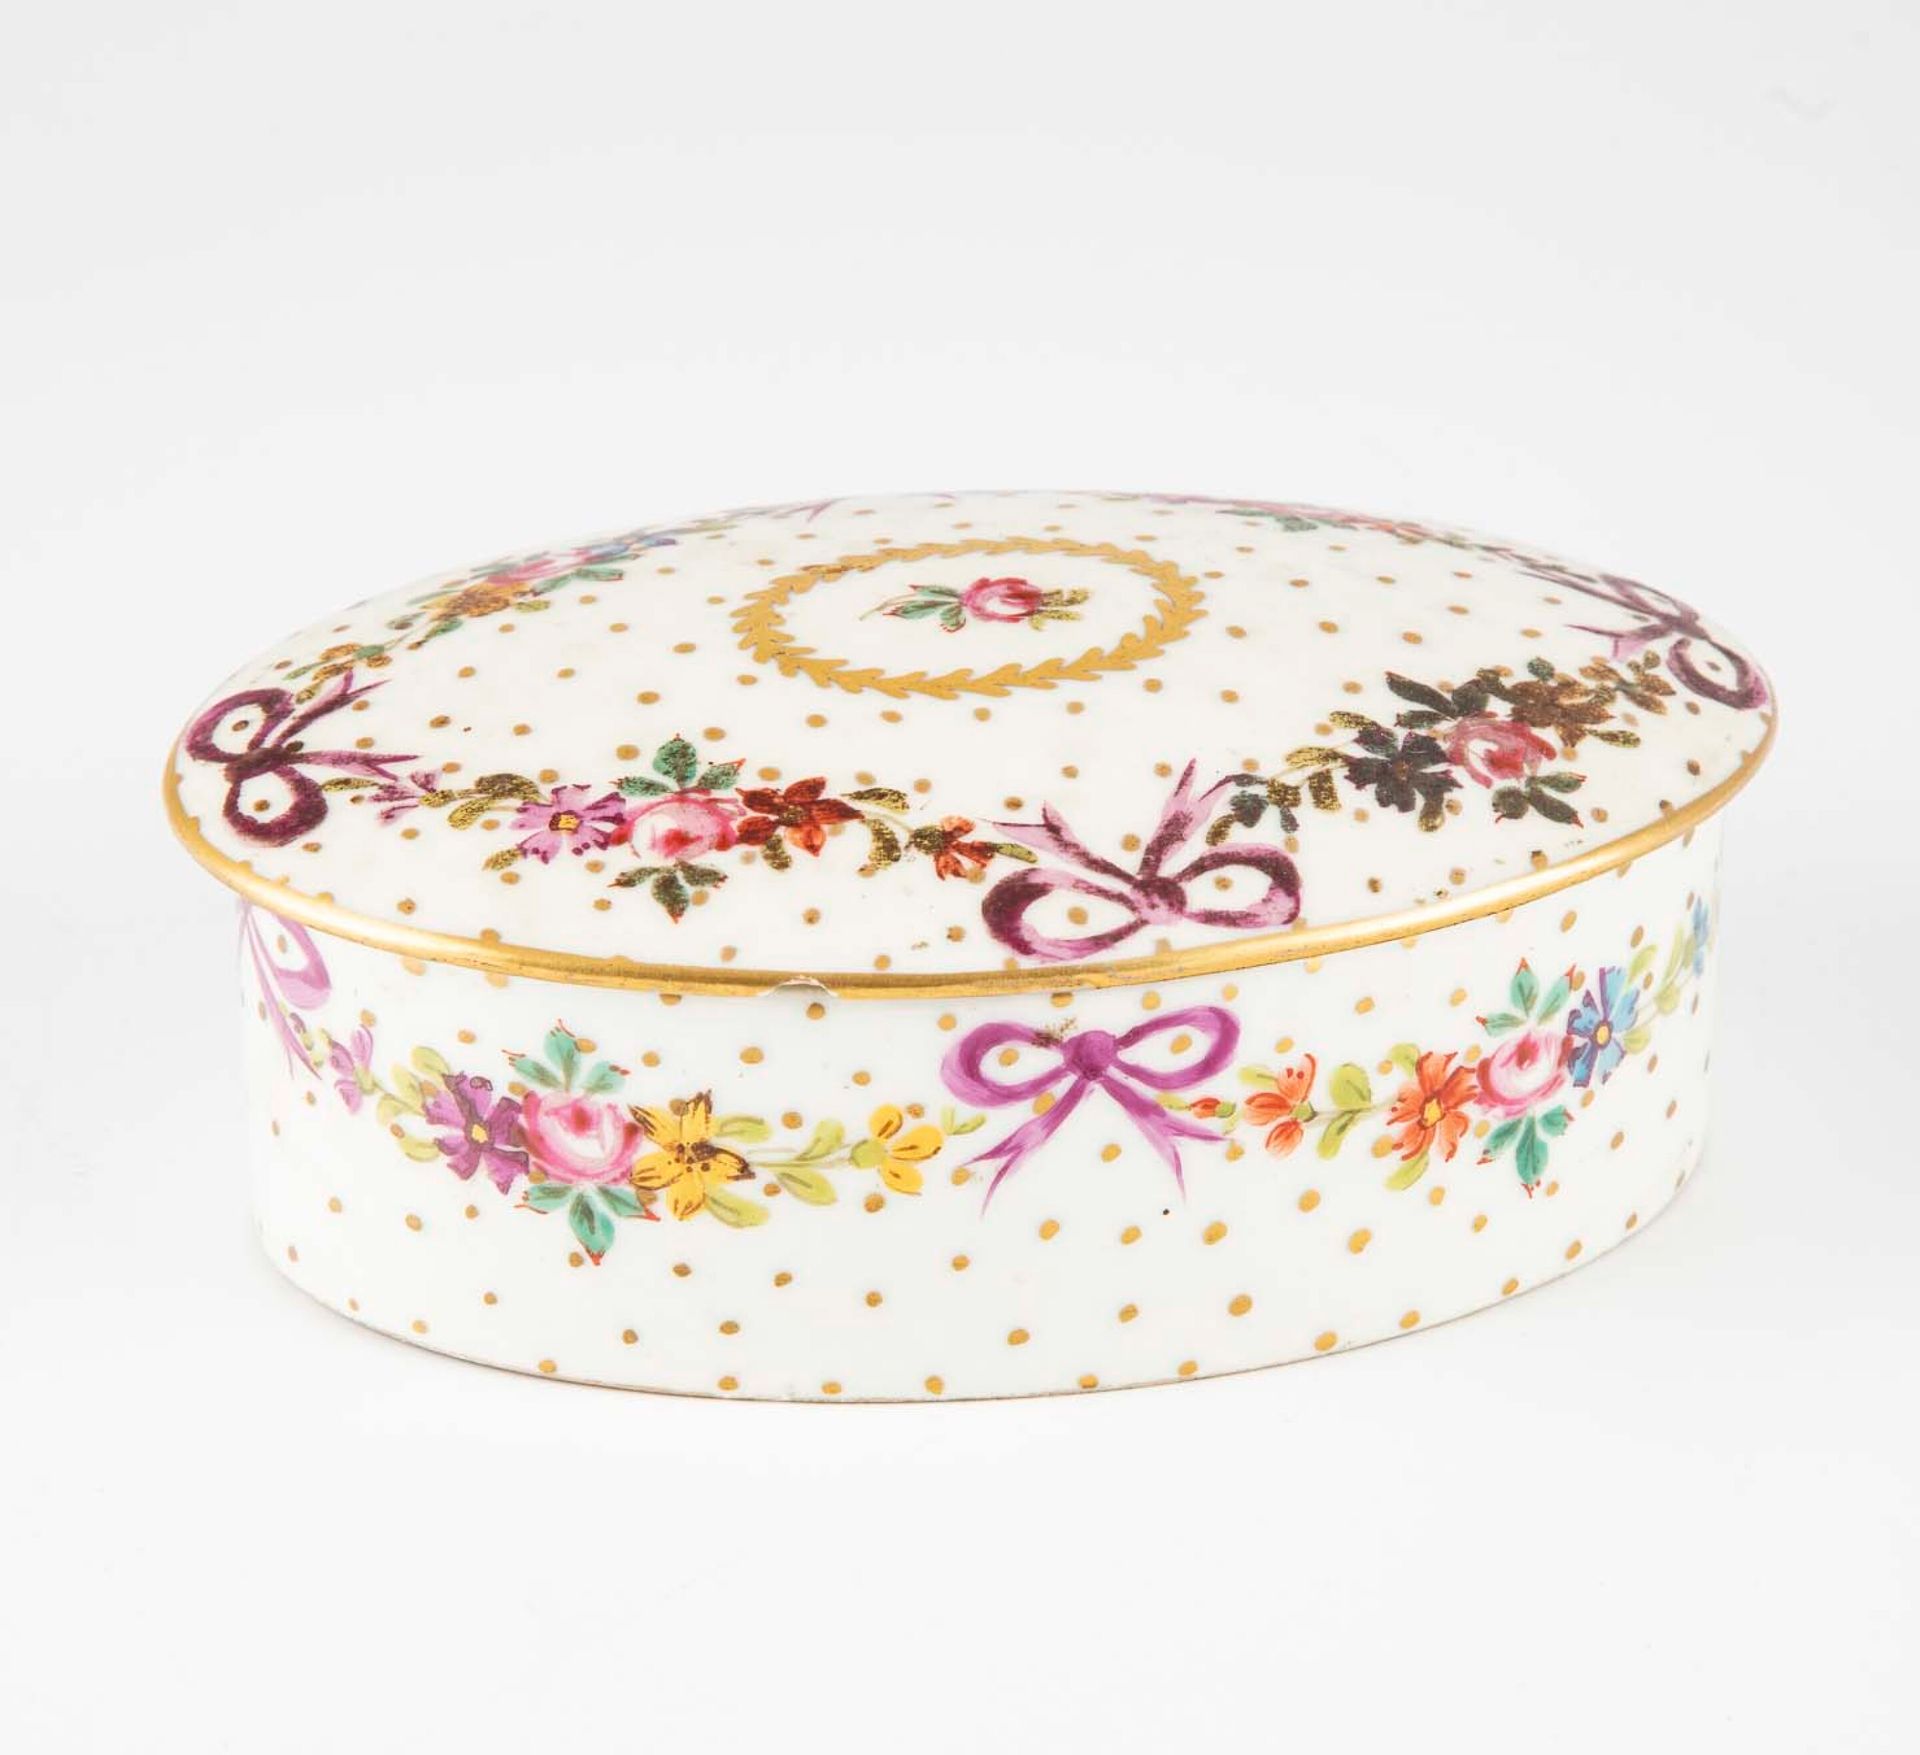 Null 利莫盖斯

椭圆形的瓷盒，带有巴黎瓷器风格的蝴蝶结和花环的多色装饰。

H.5厘米

(Chipping)